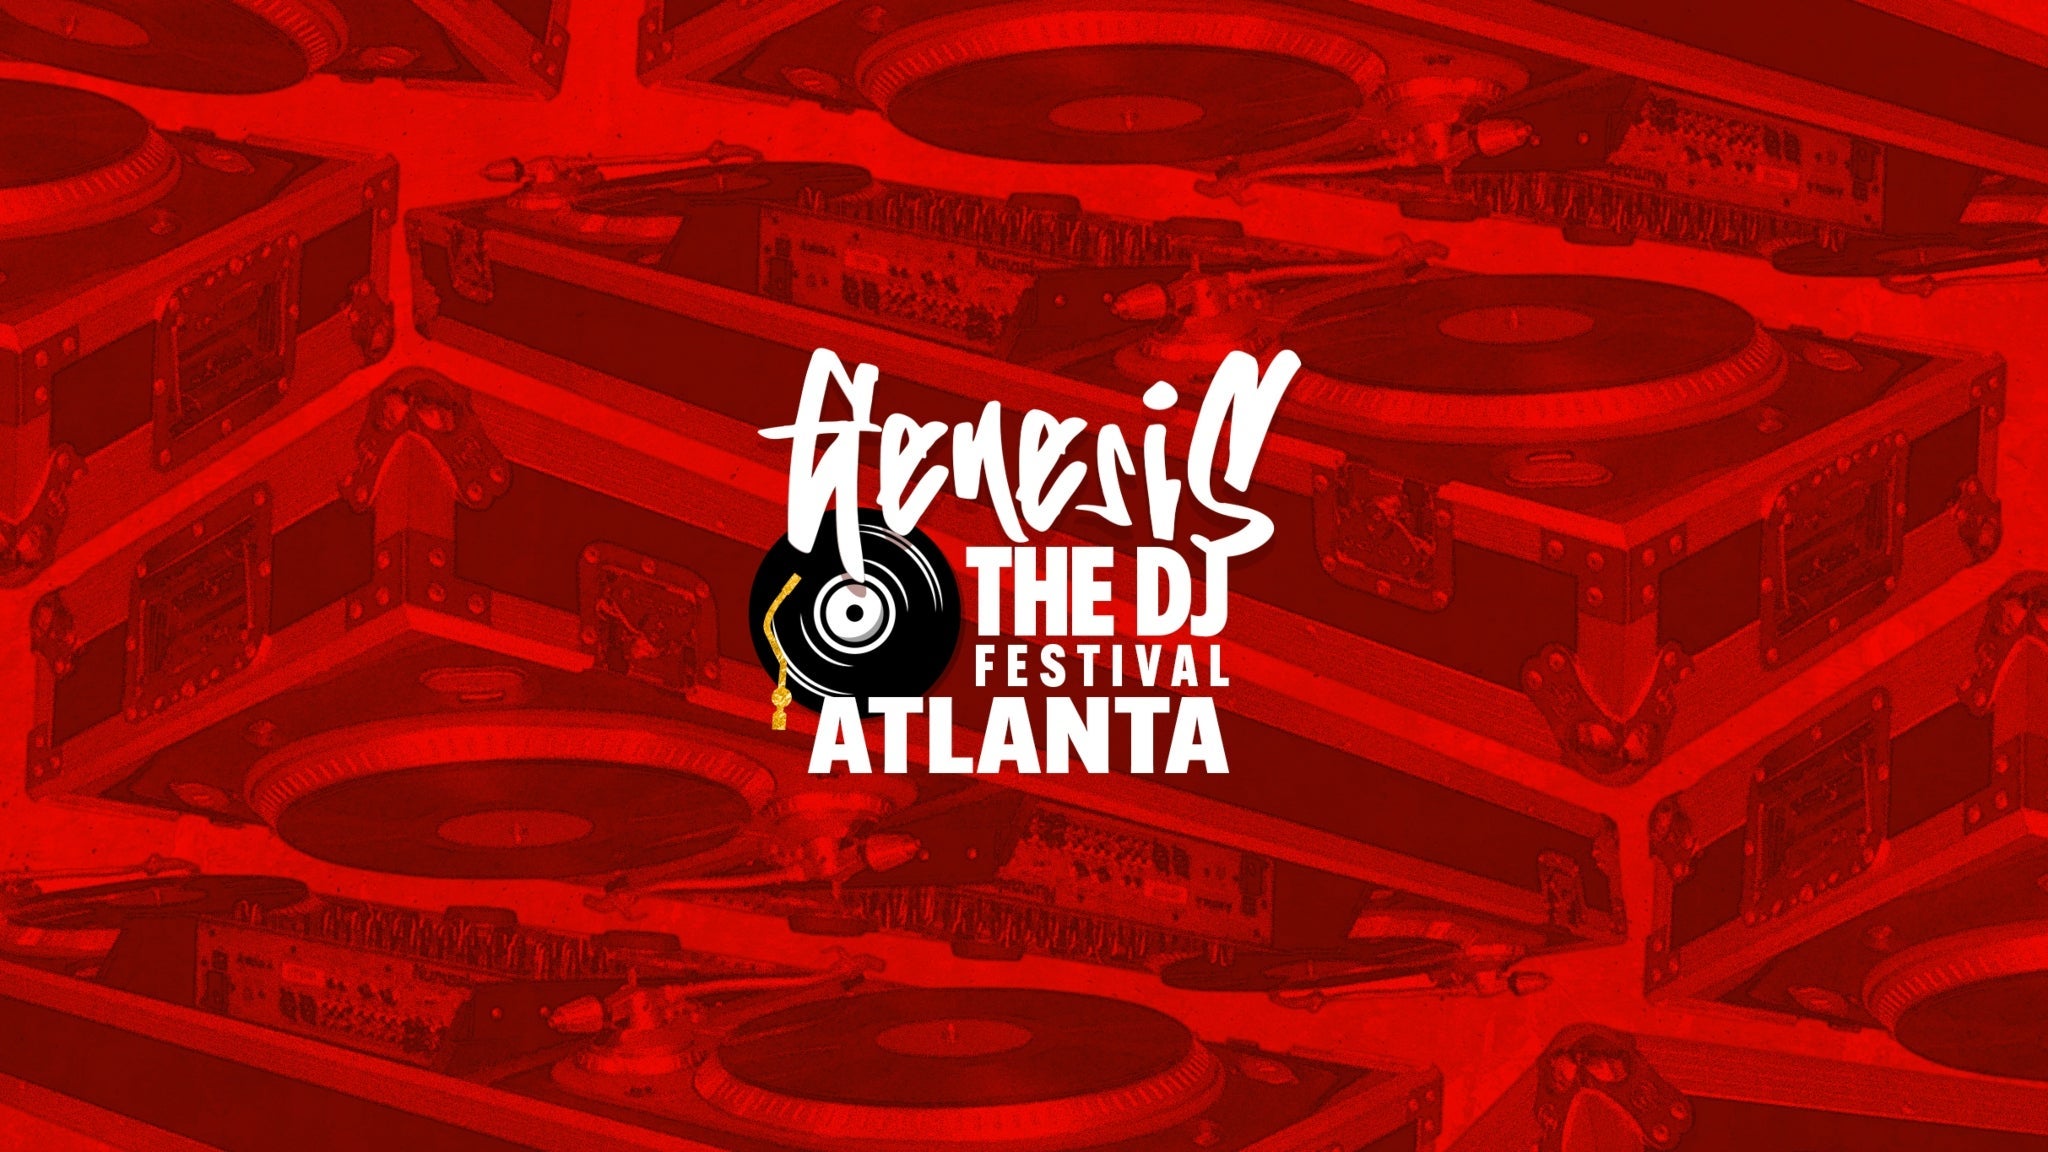 GENESIS THE DJ FESTIVAL ATLANTA: A HIP HOP 50 CELEBRATION Day Pass in Atlanta promo photo for Early Bird presale offer code